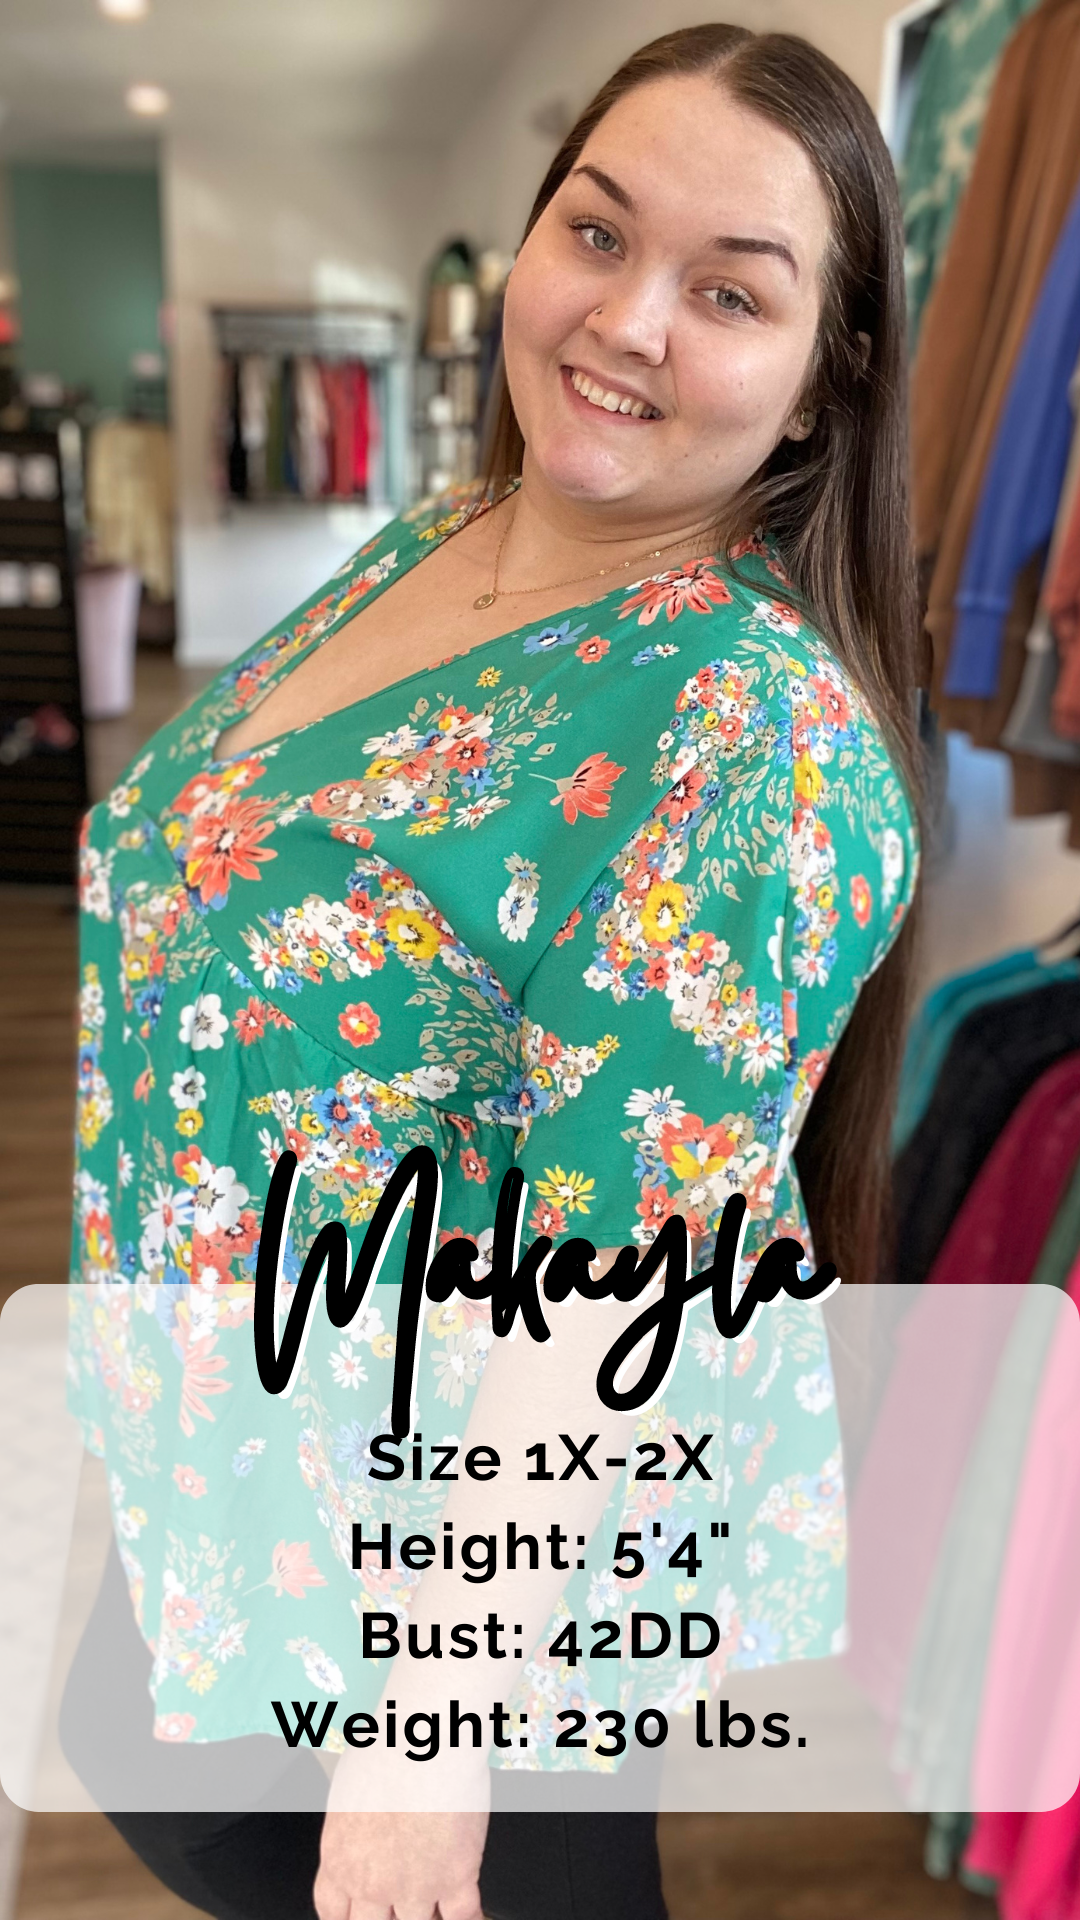 Meet The Models | Makayla